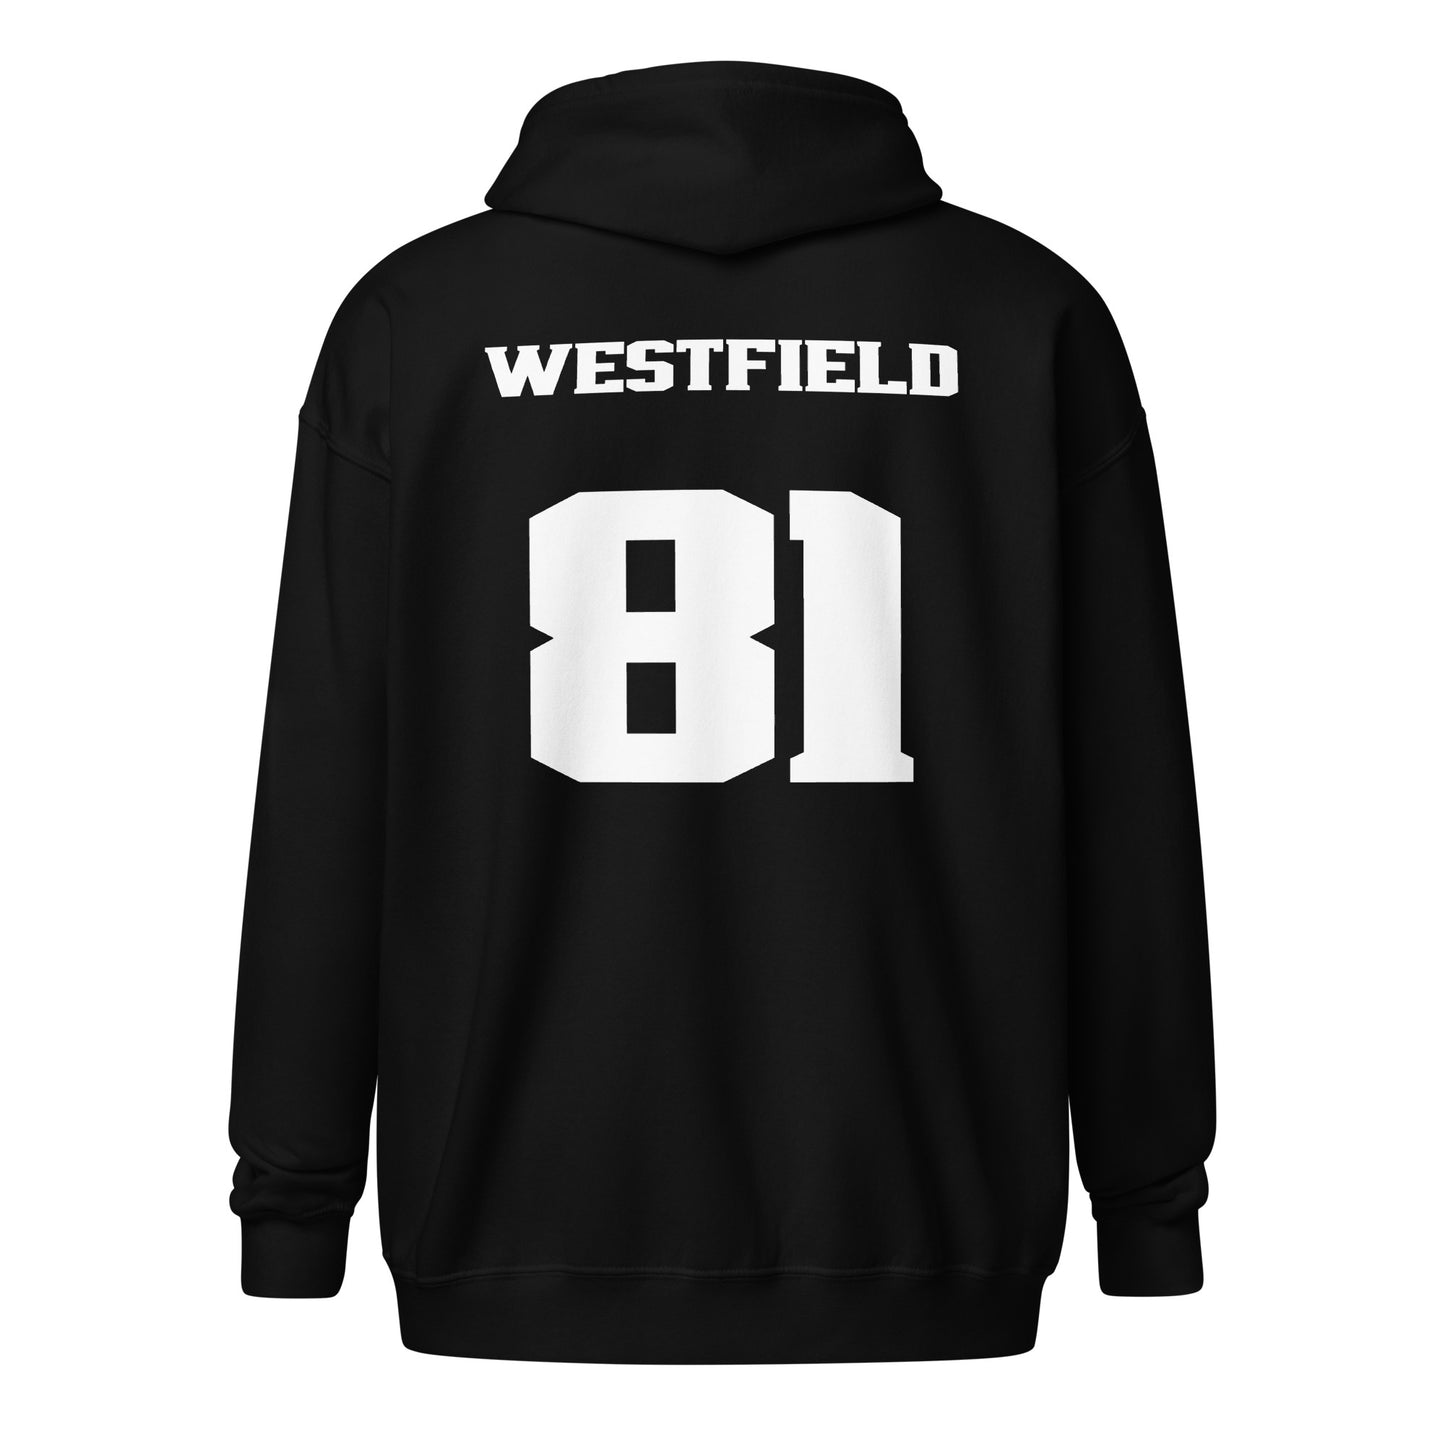 Chaos E. Westfield zip hoodie